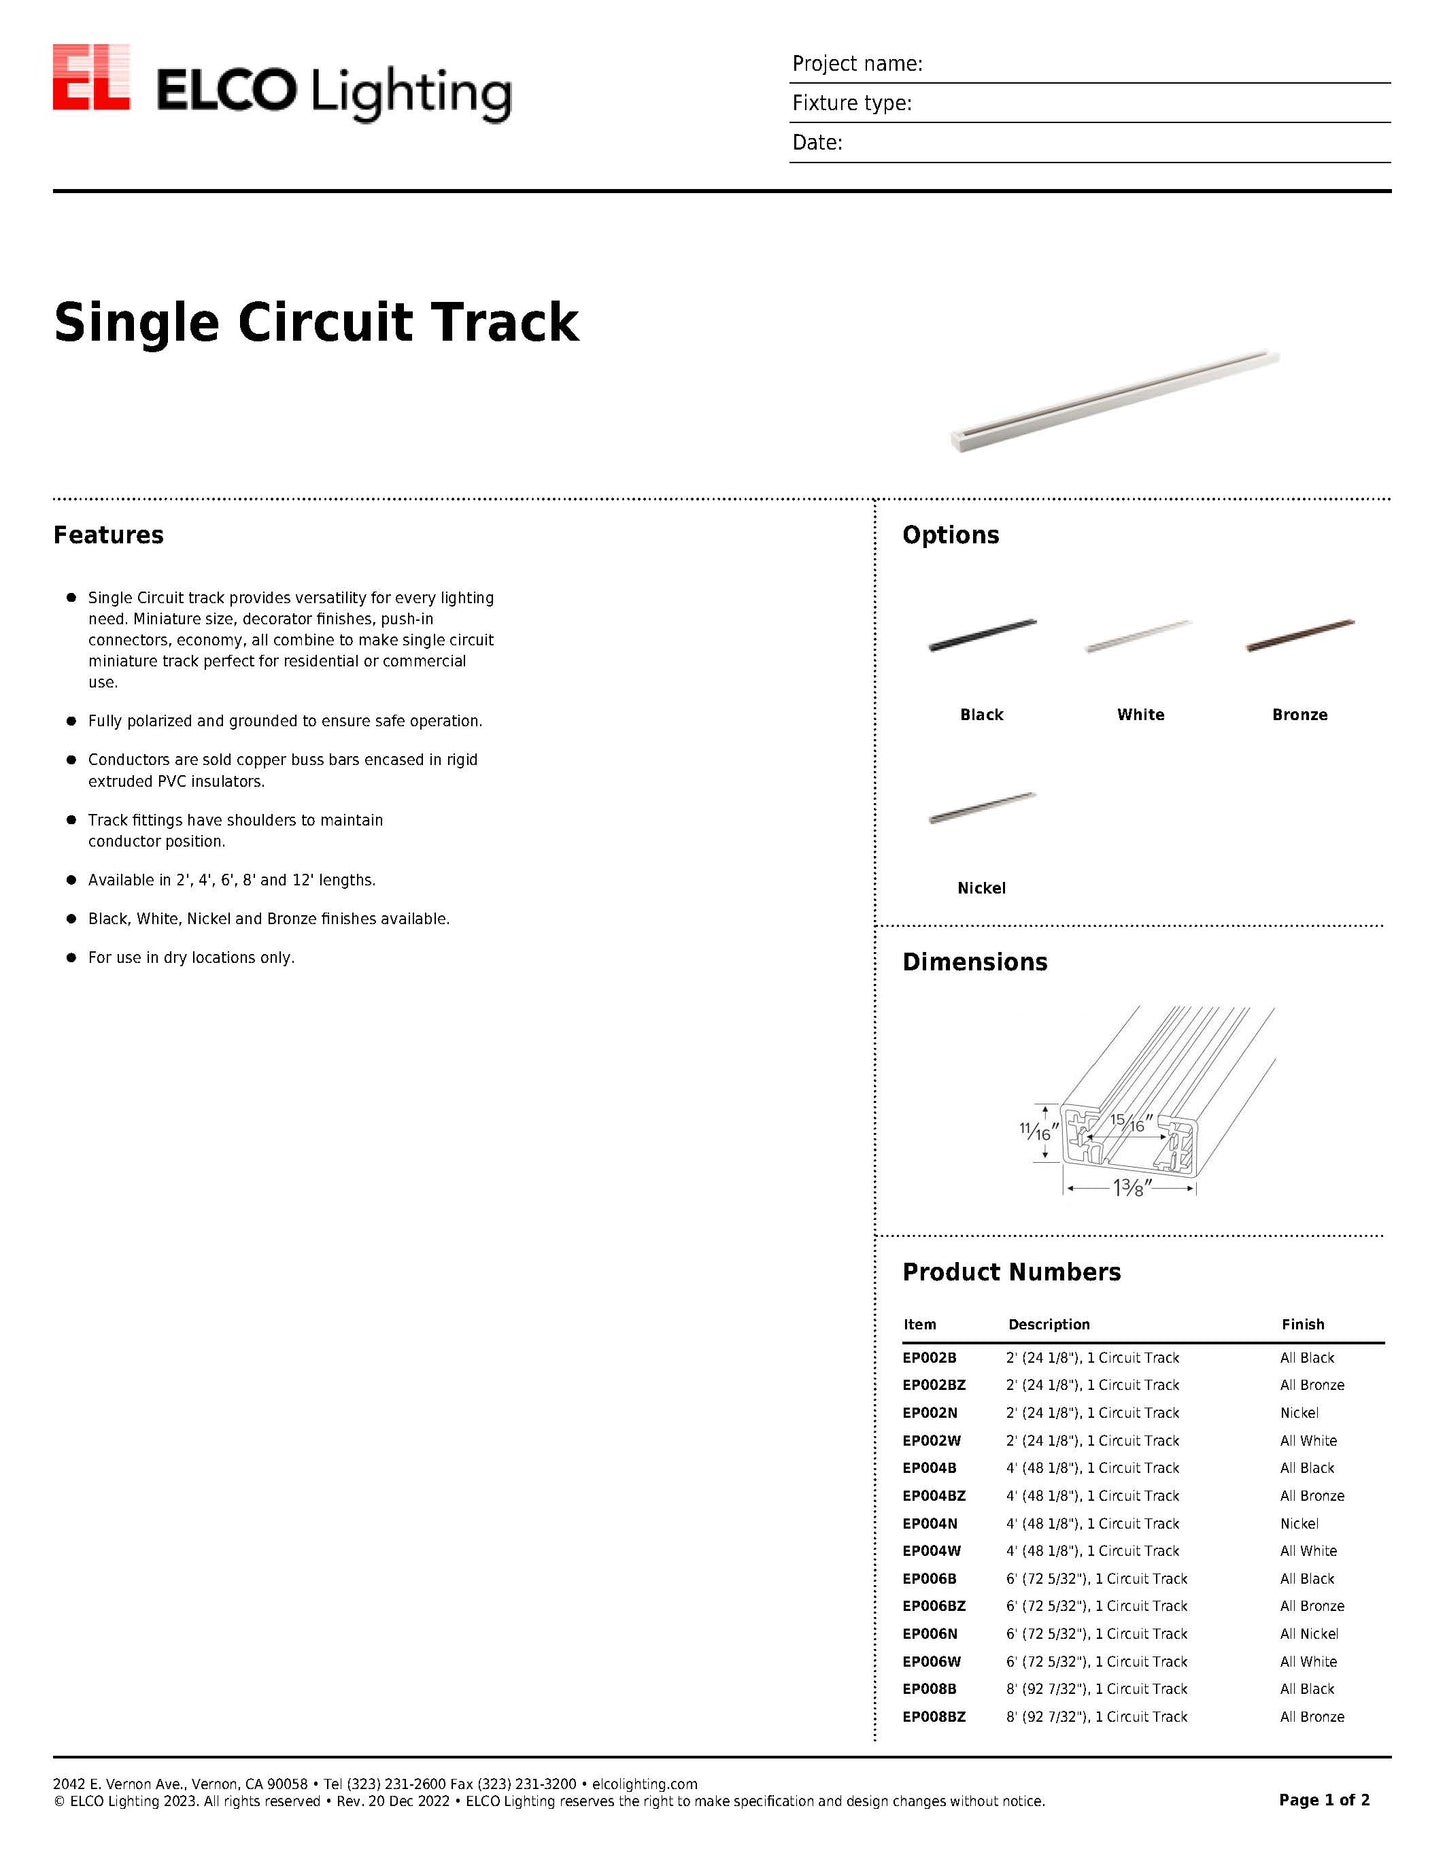 Single Circuit Track - Black